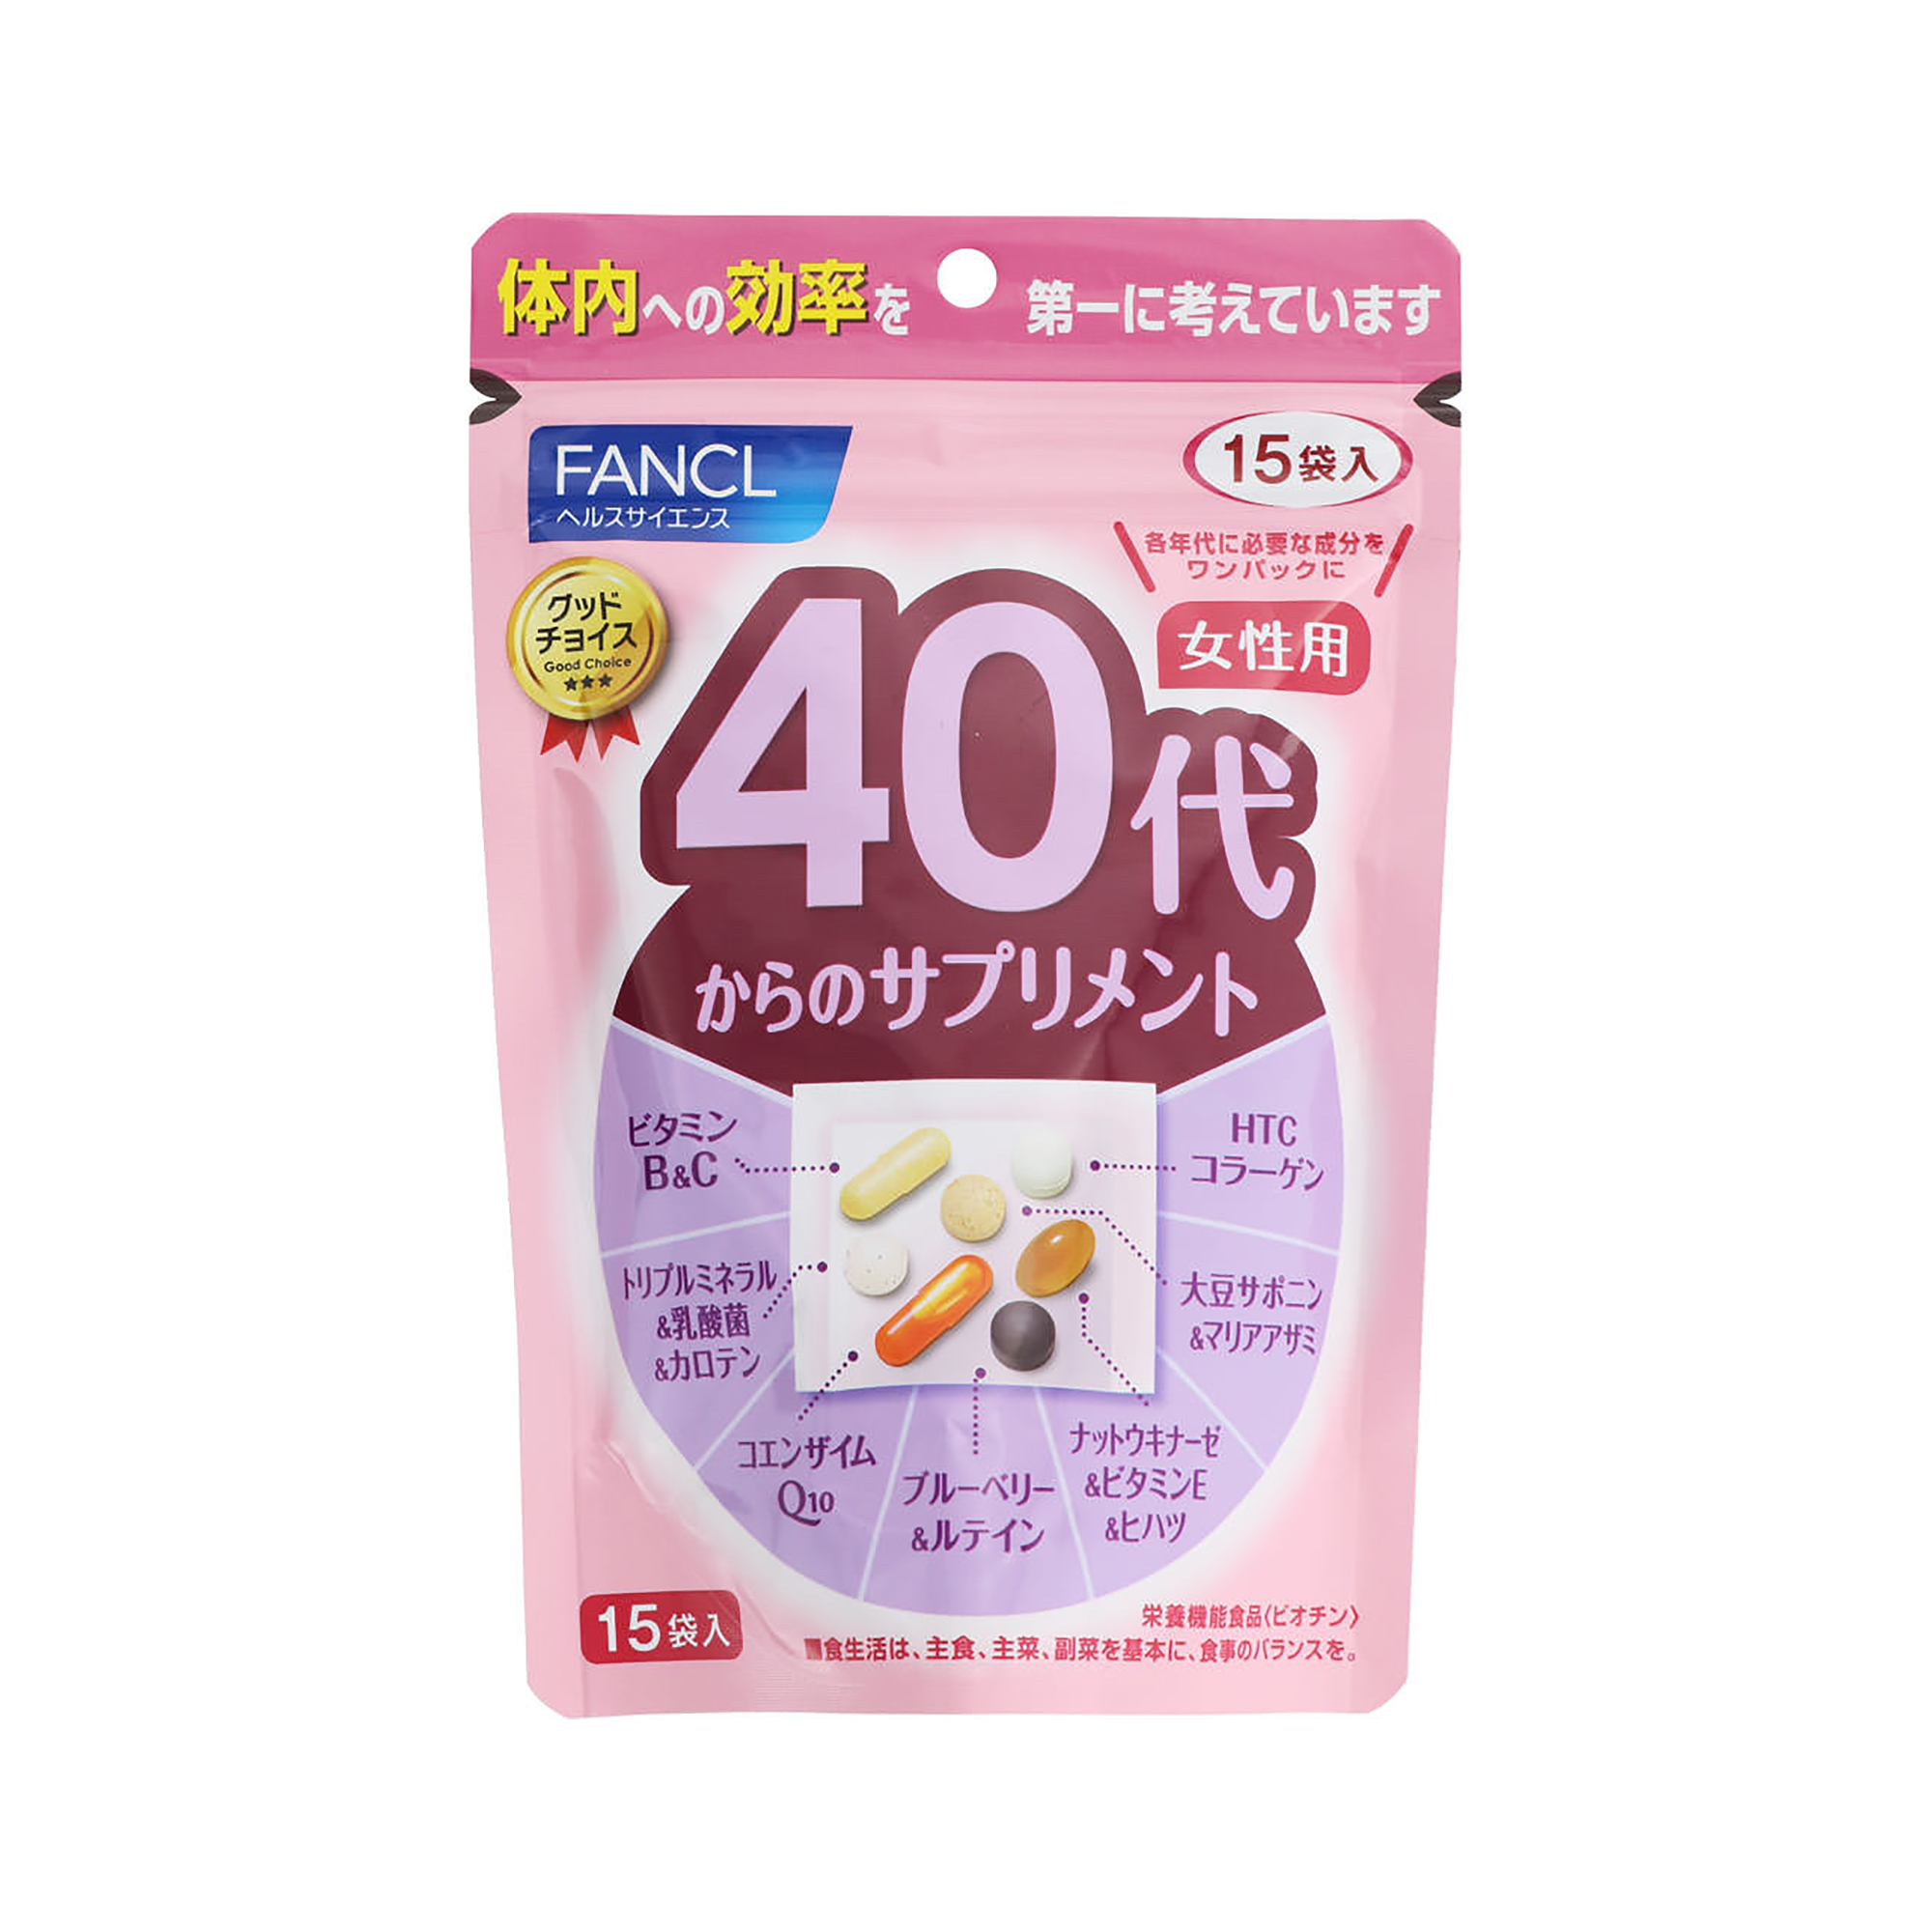 FANCL 40代女性综合营养包 7粒×15袋